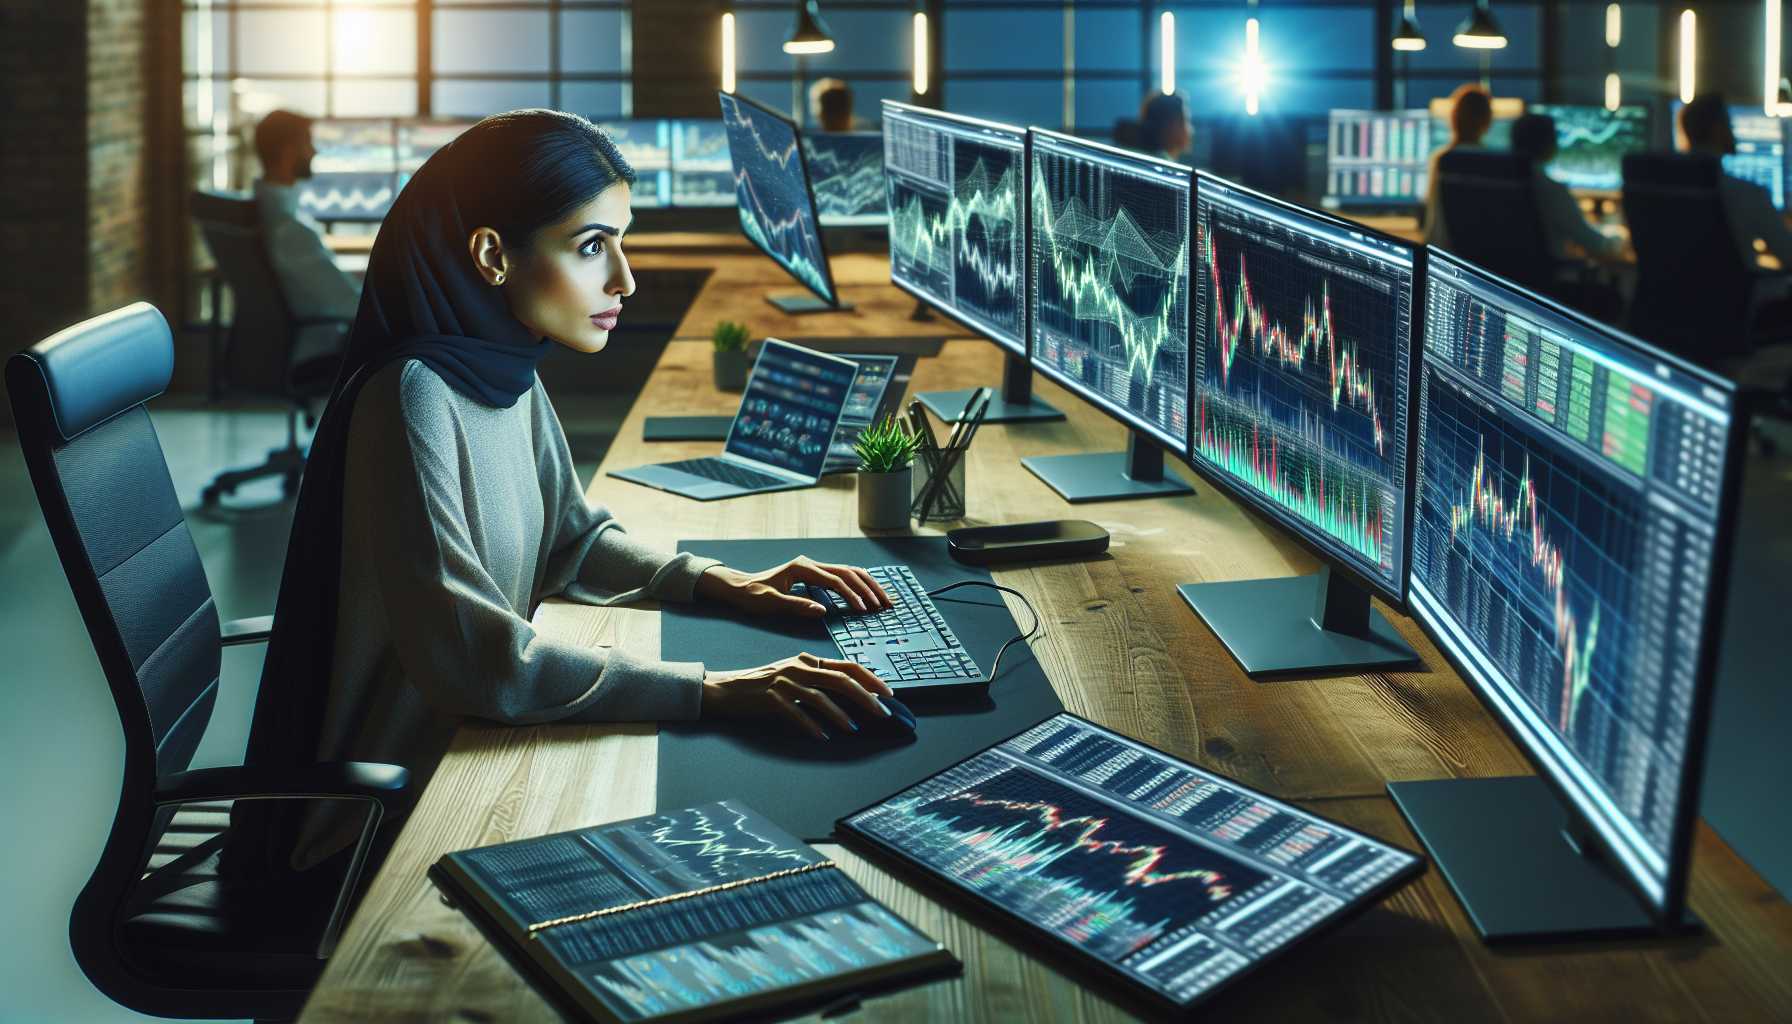 Investor analyzing tech stocks on multiple computer screens